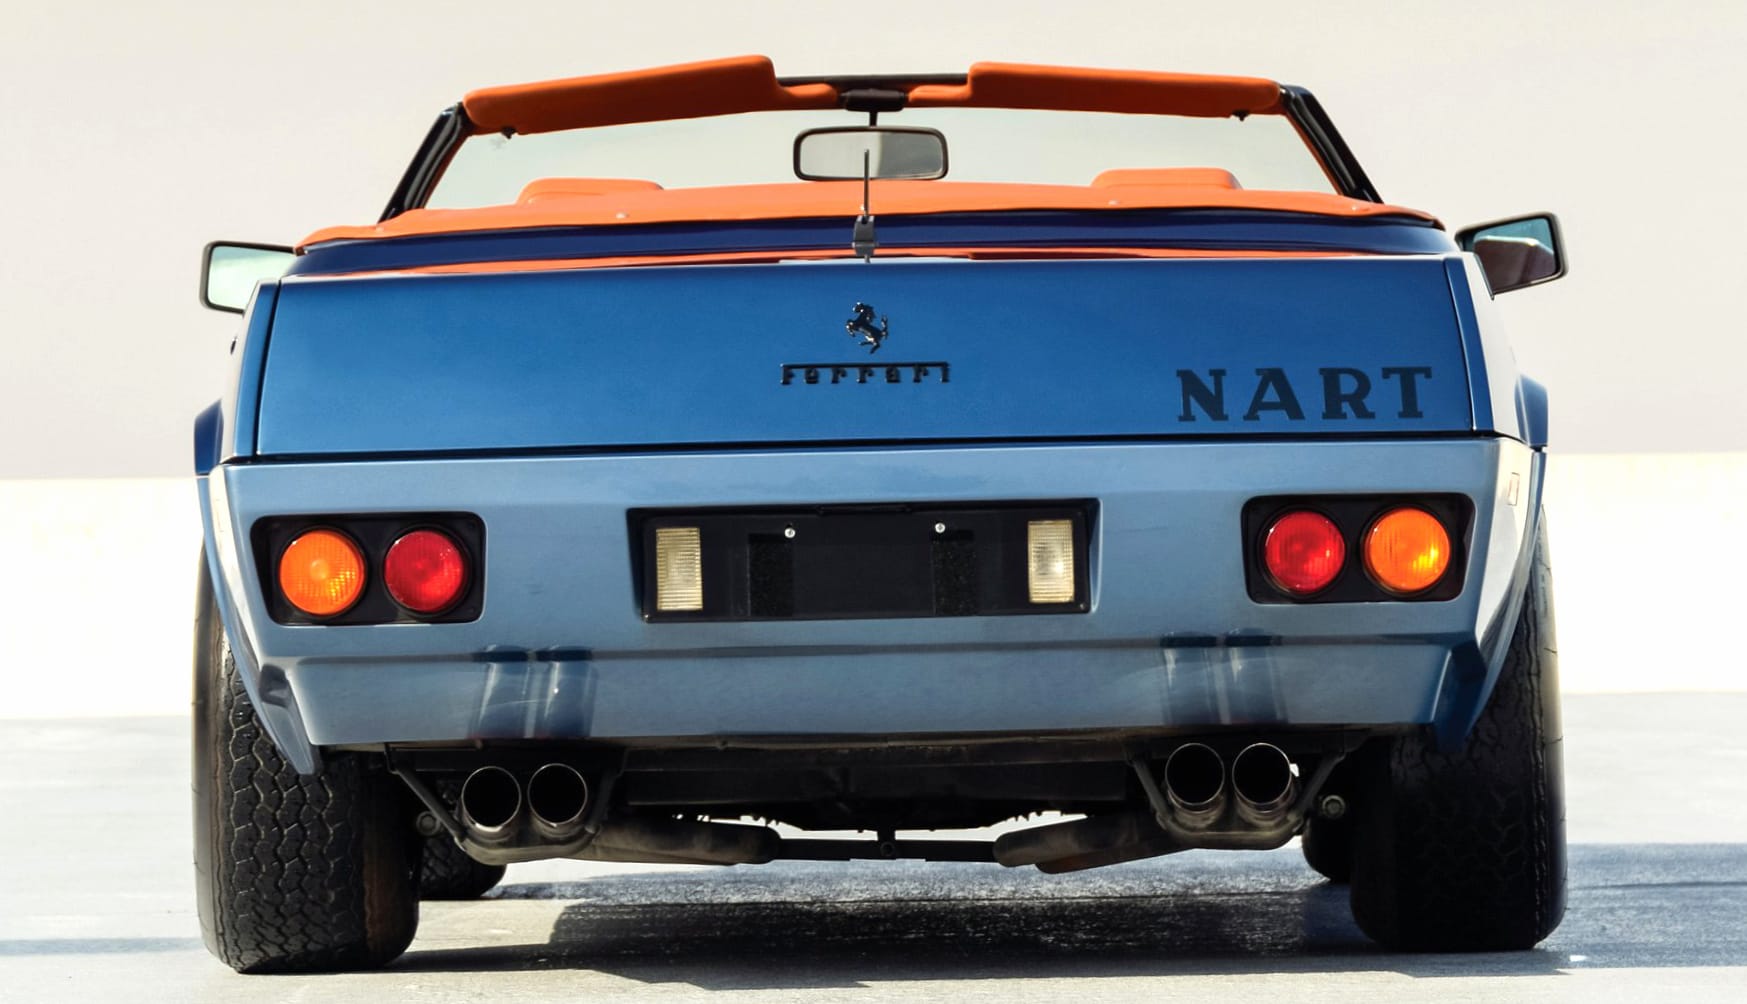 Ferrari 365 GTB 4 NART Spider at 1600 x 1200 size wallpapers HD quality